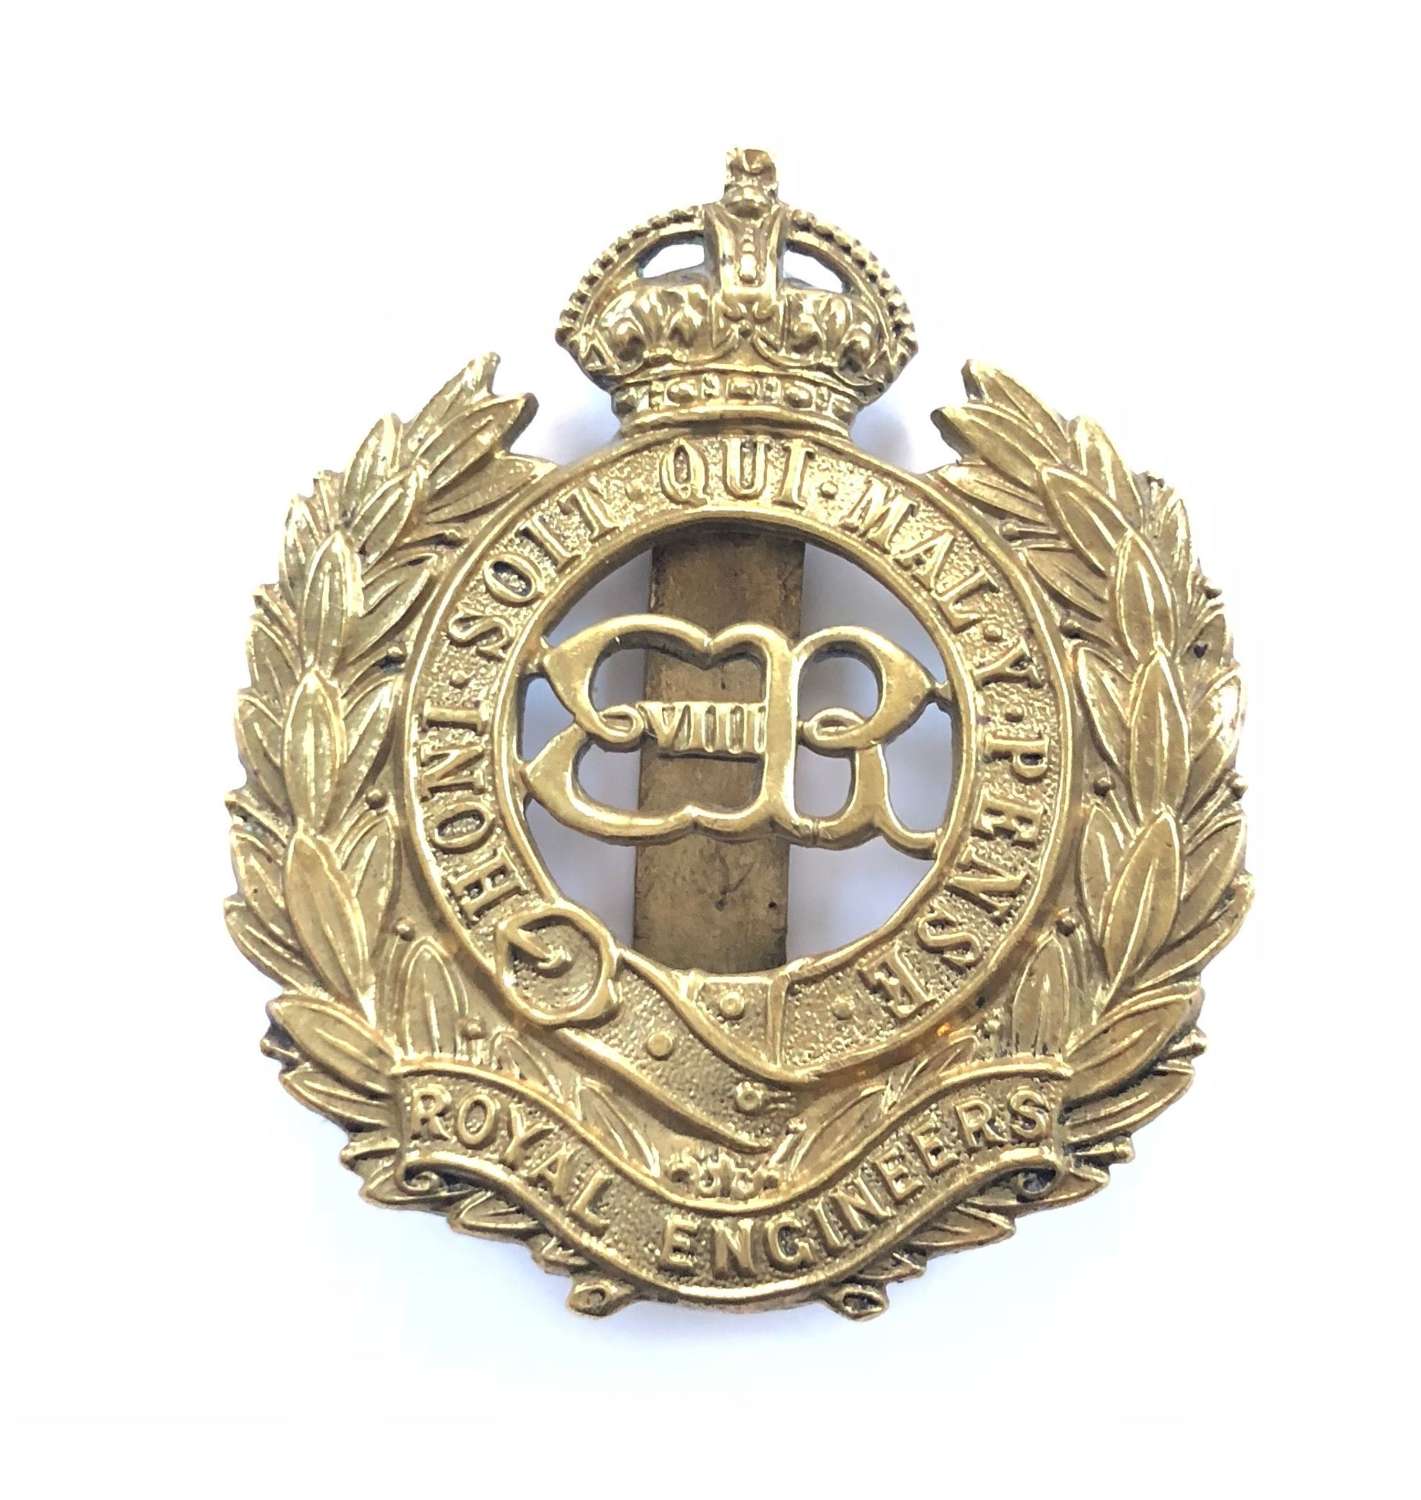 Royal Engineers scarce Edward VIII 1936 OR’s cap badge